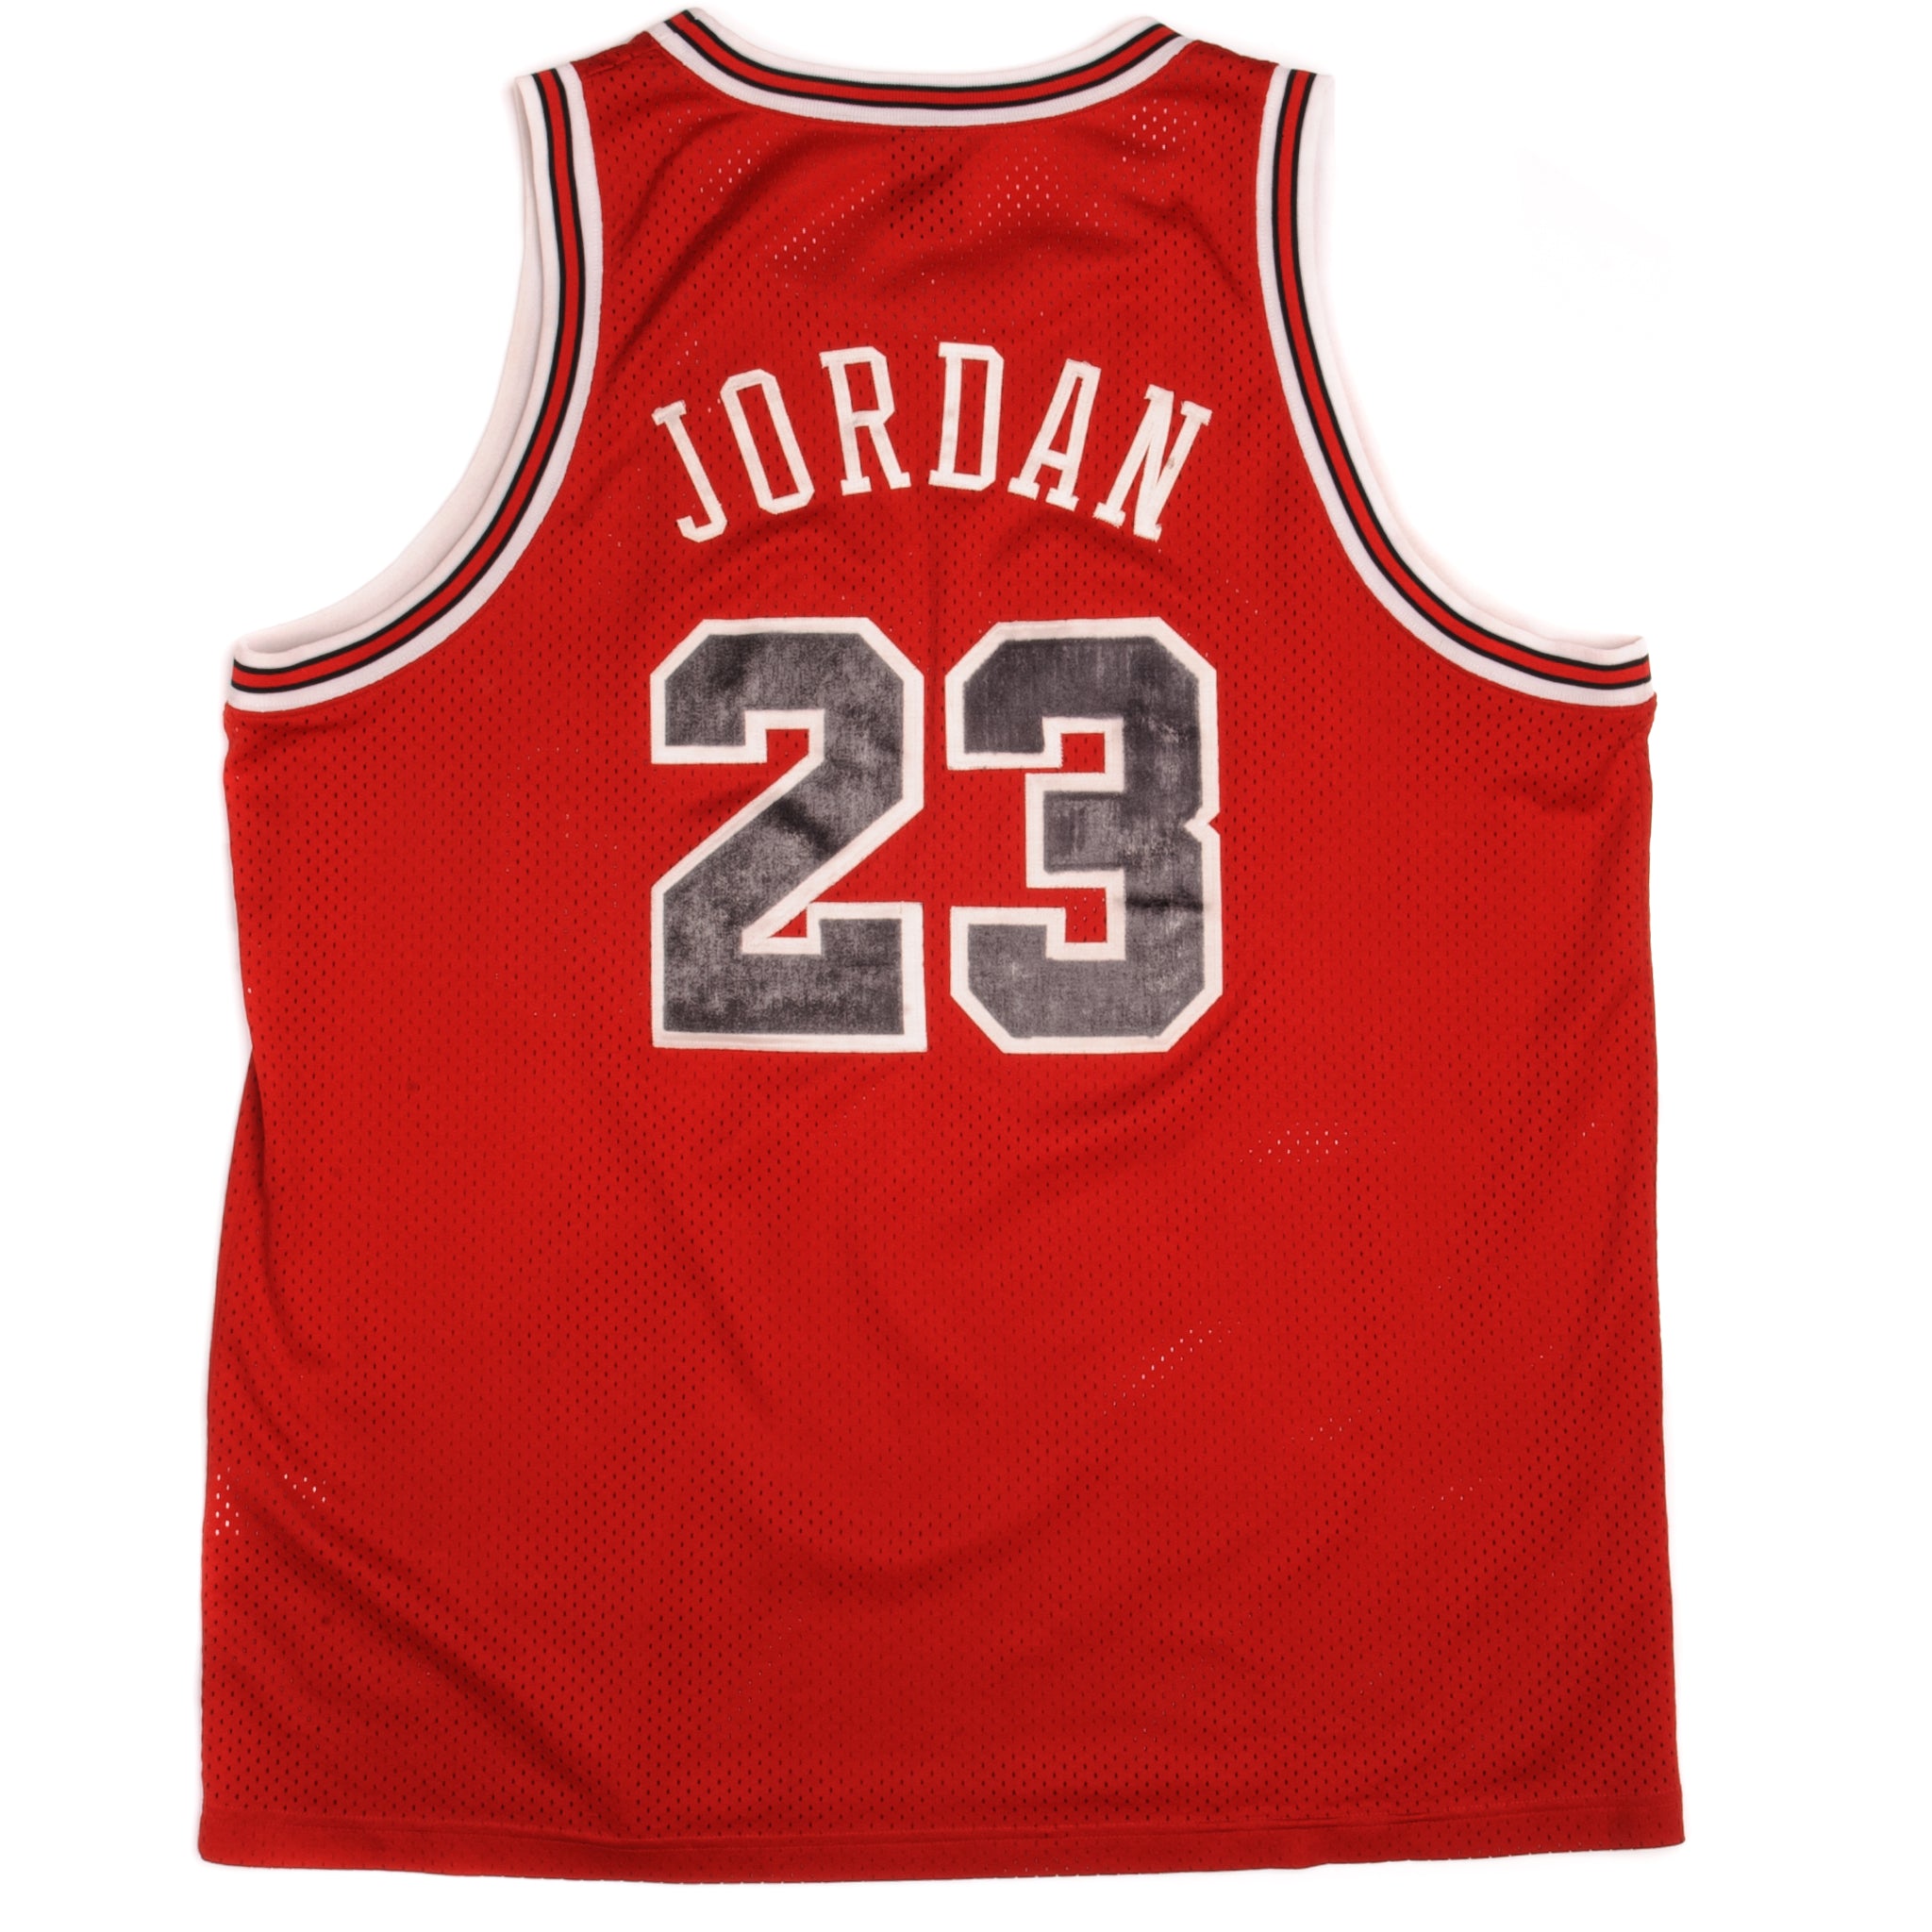 Men's Chicago Bulls 23 Michael Jordan retro basketball jersey